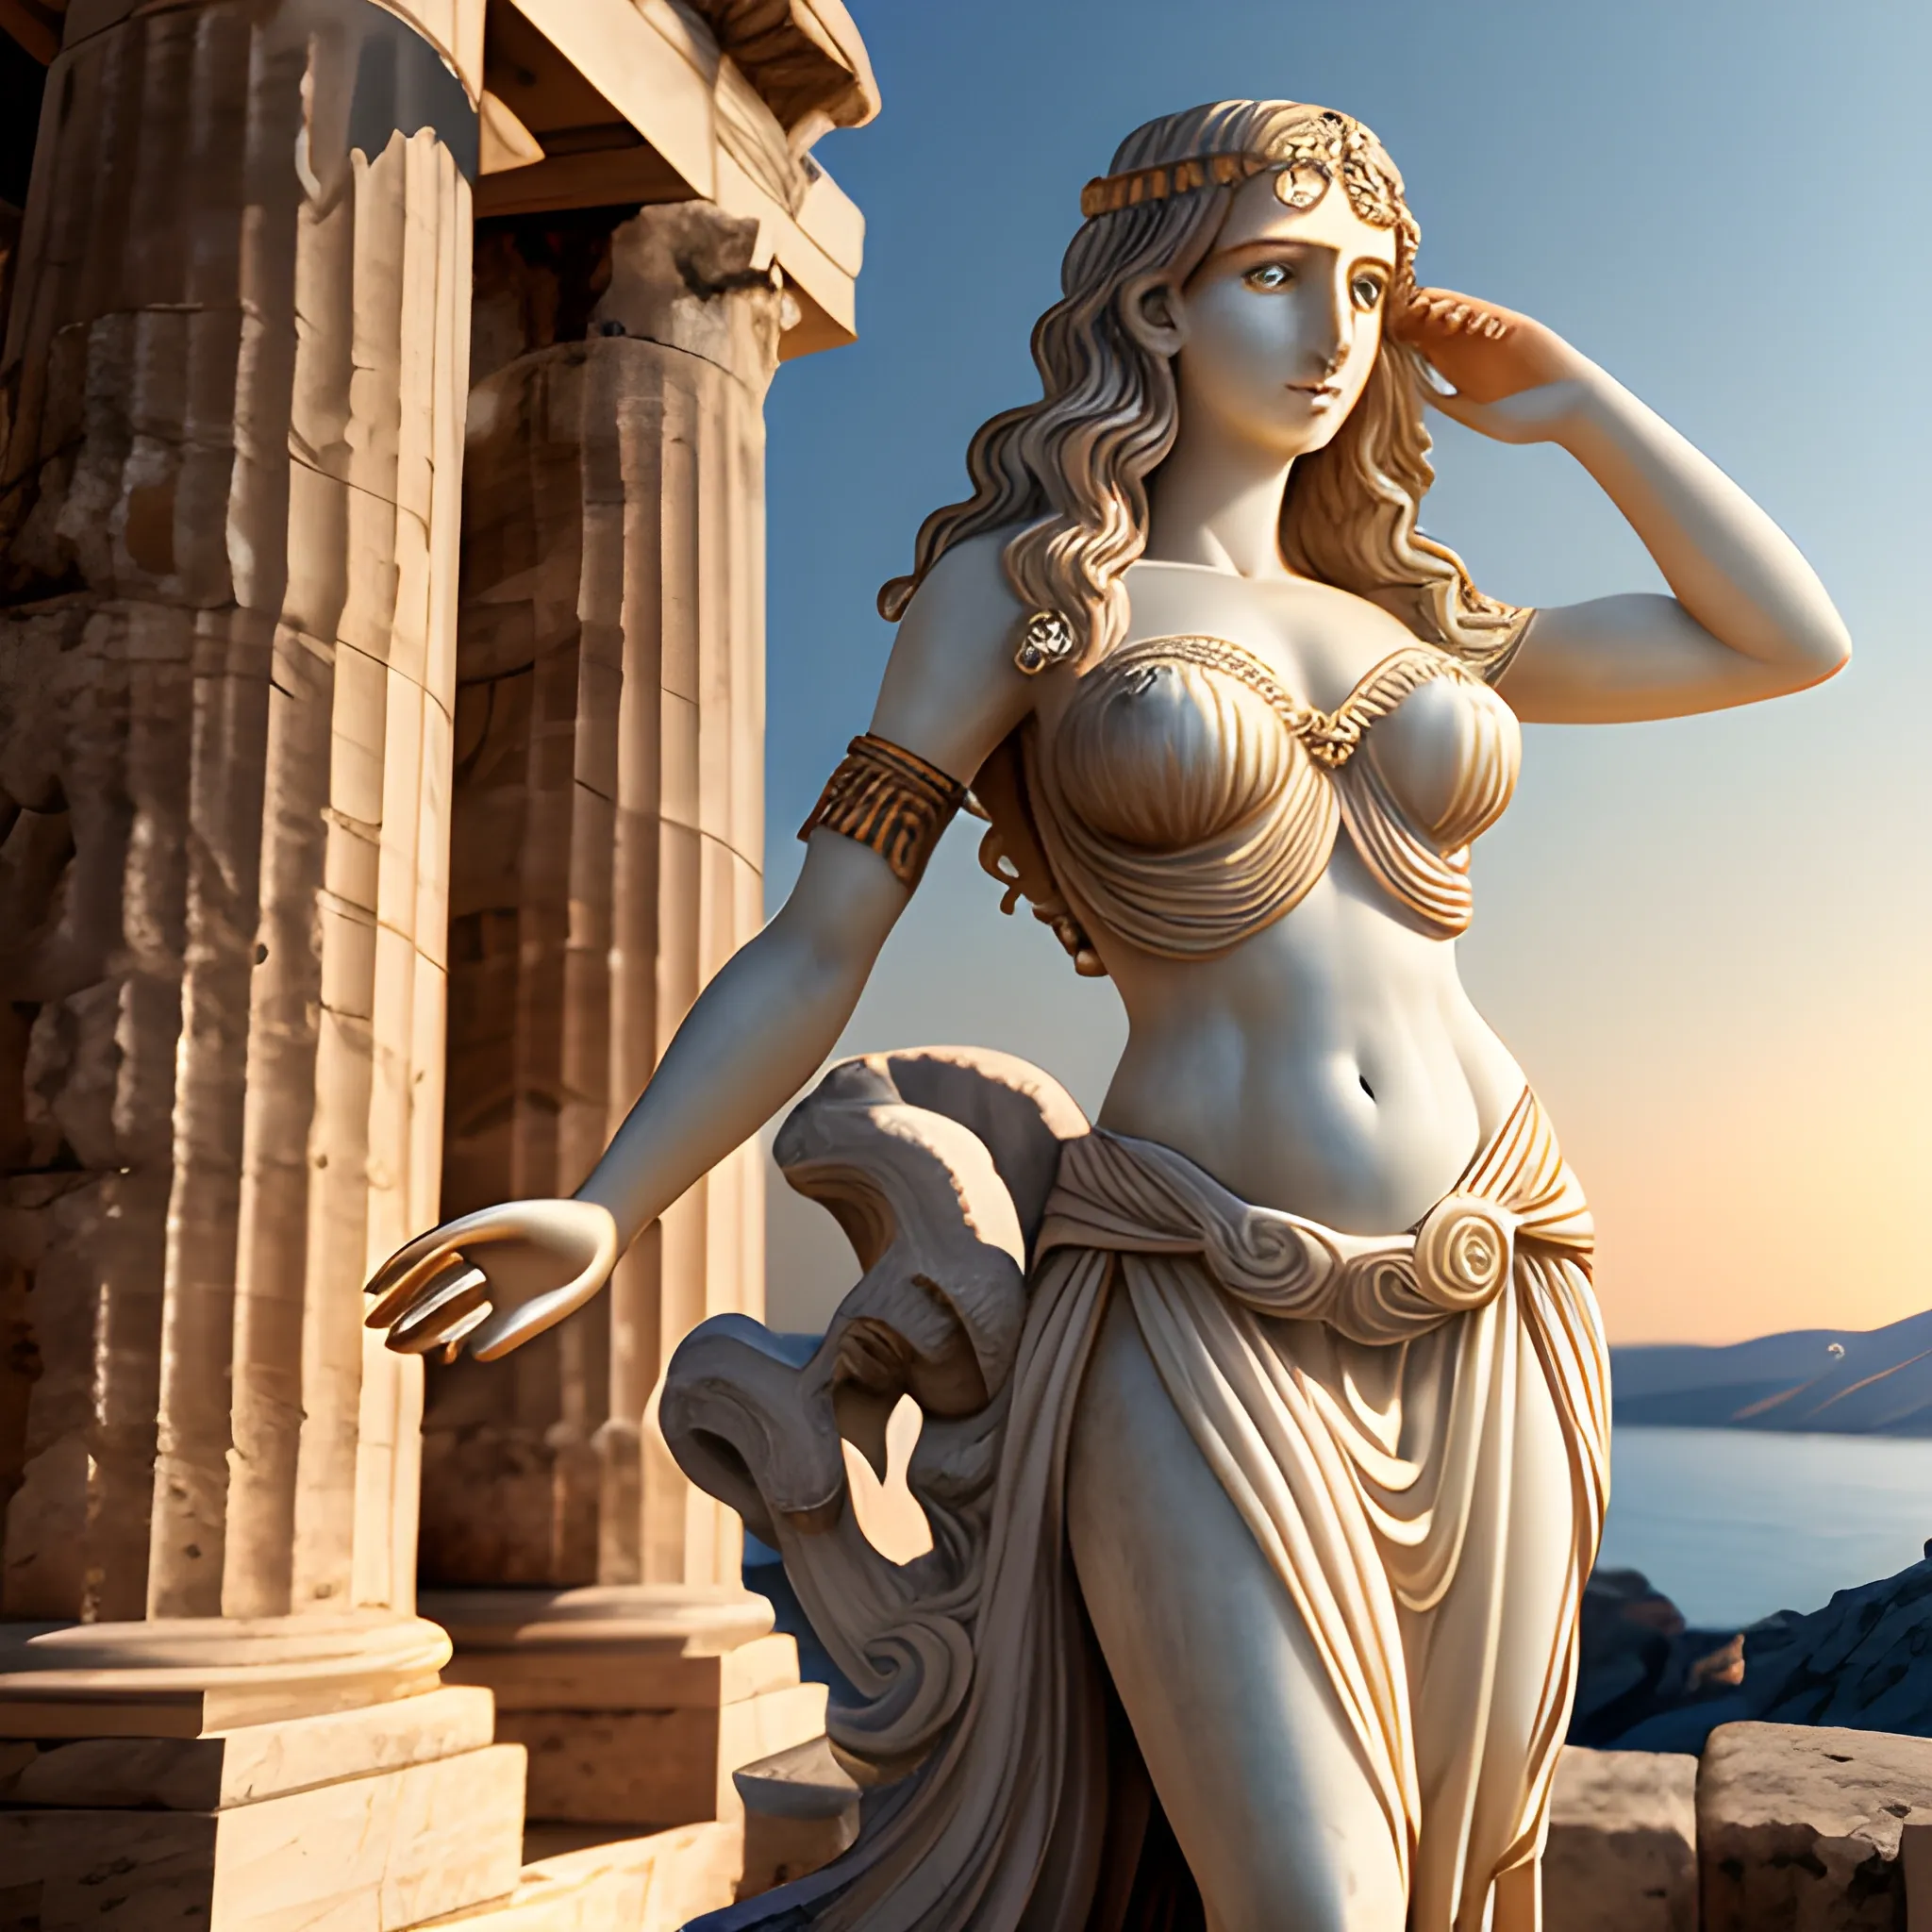 venus, goddess, greek, ancient greece, greek goddess, full body, slender woman, greek clothing, wavy hair, light eyes, glowing eyes, clear teas, hyperrealism, detailed image, masterpiece, 8k